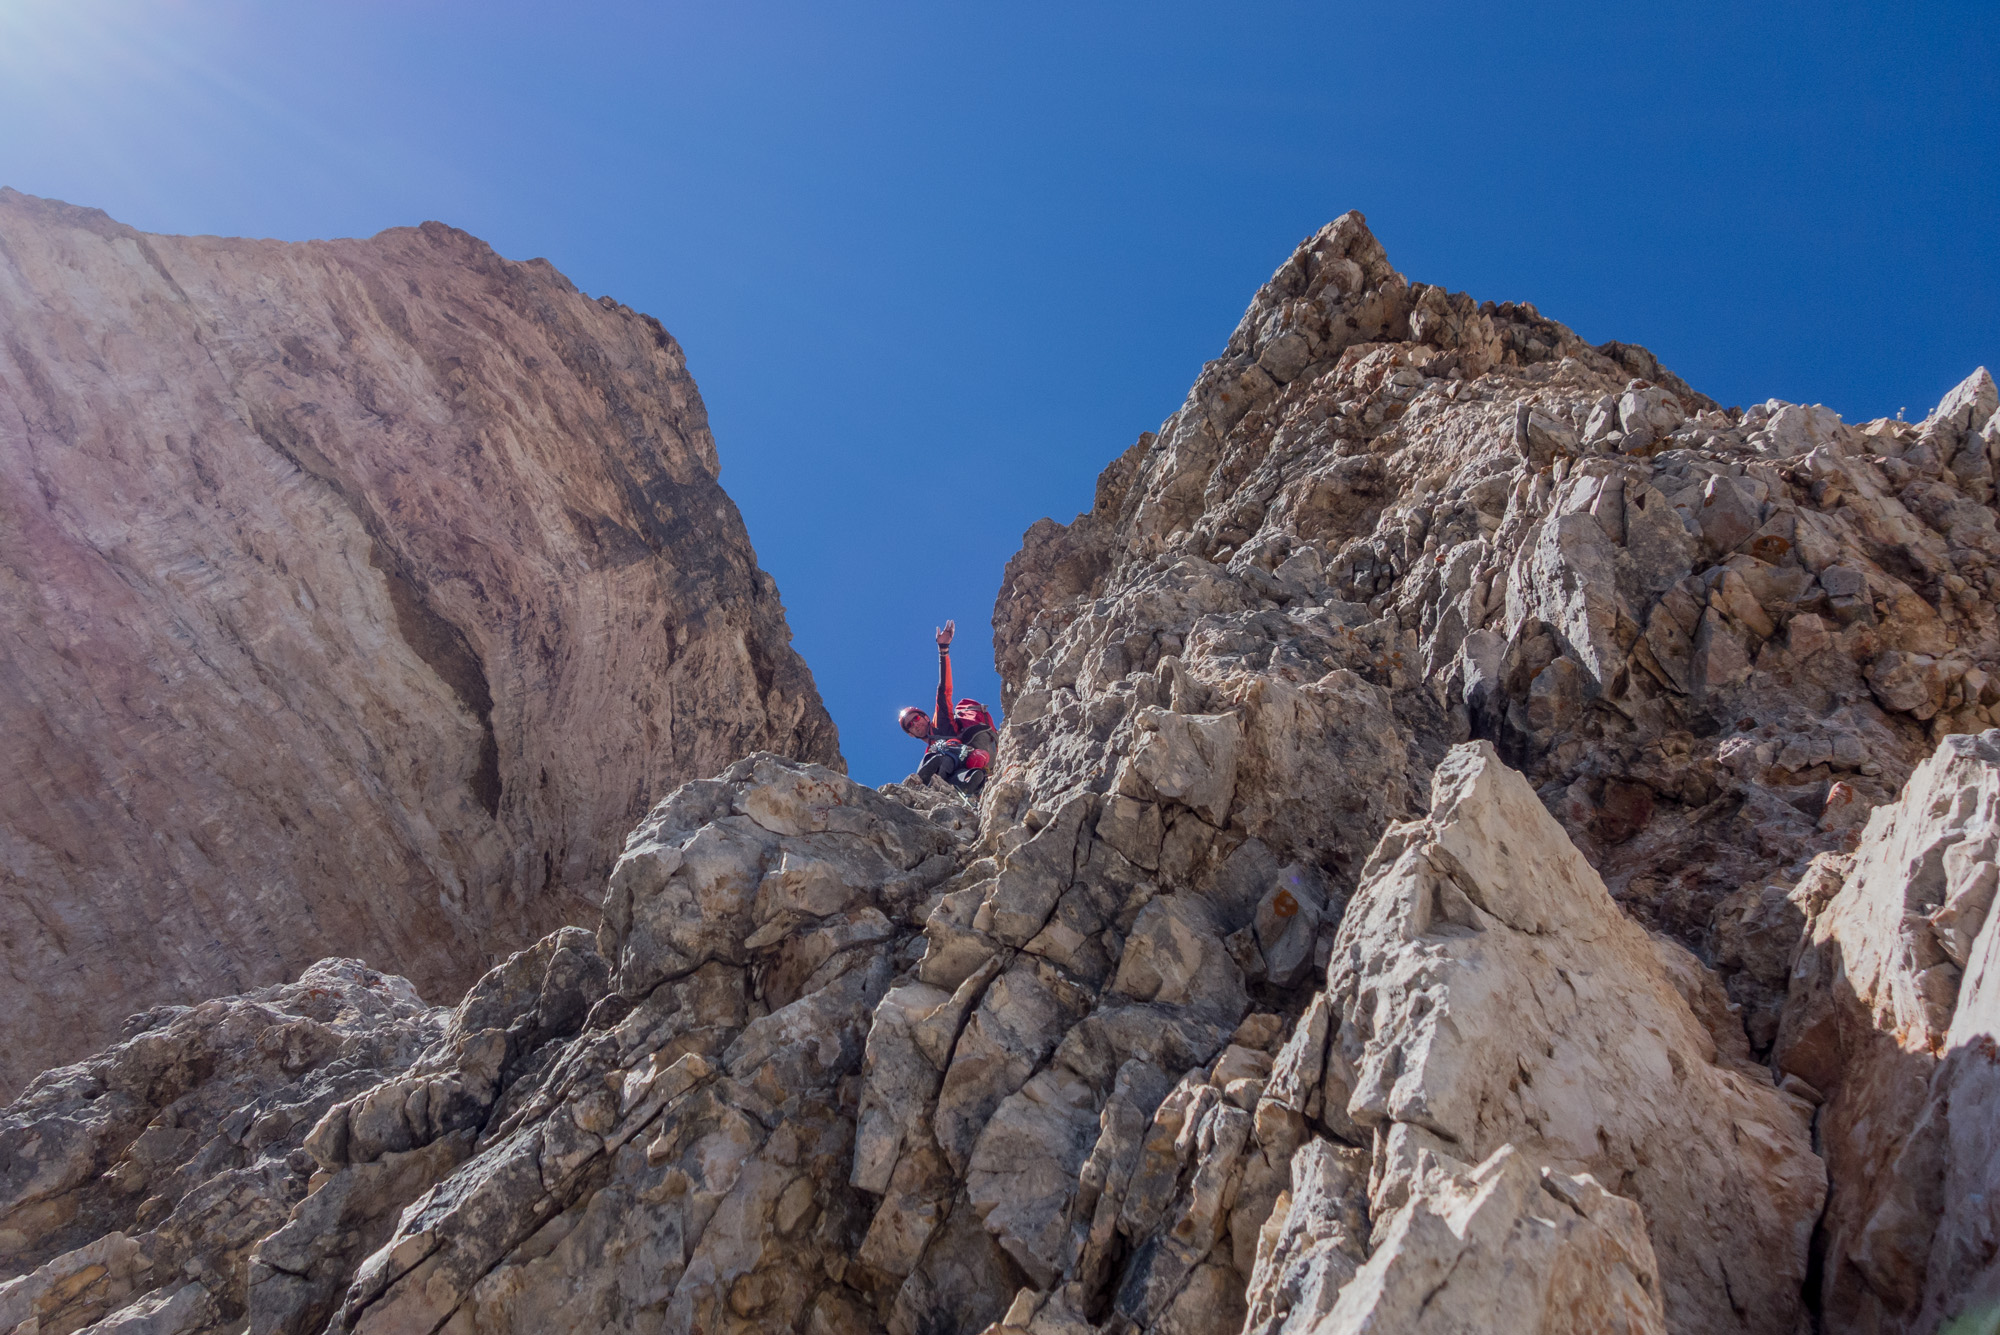 alpine summer rock climbing on the primo sigolo tofana in the dolomites